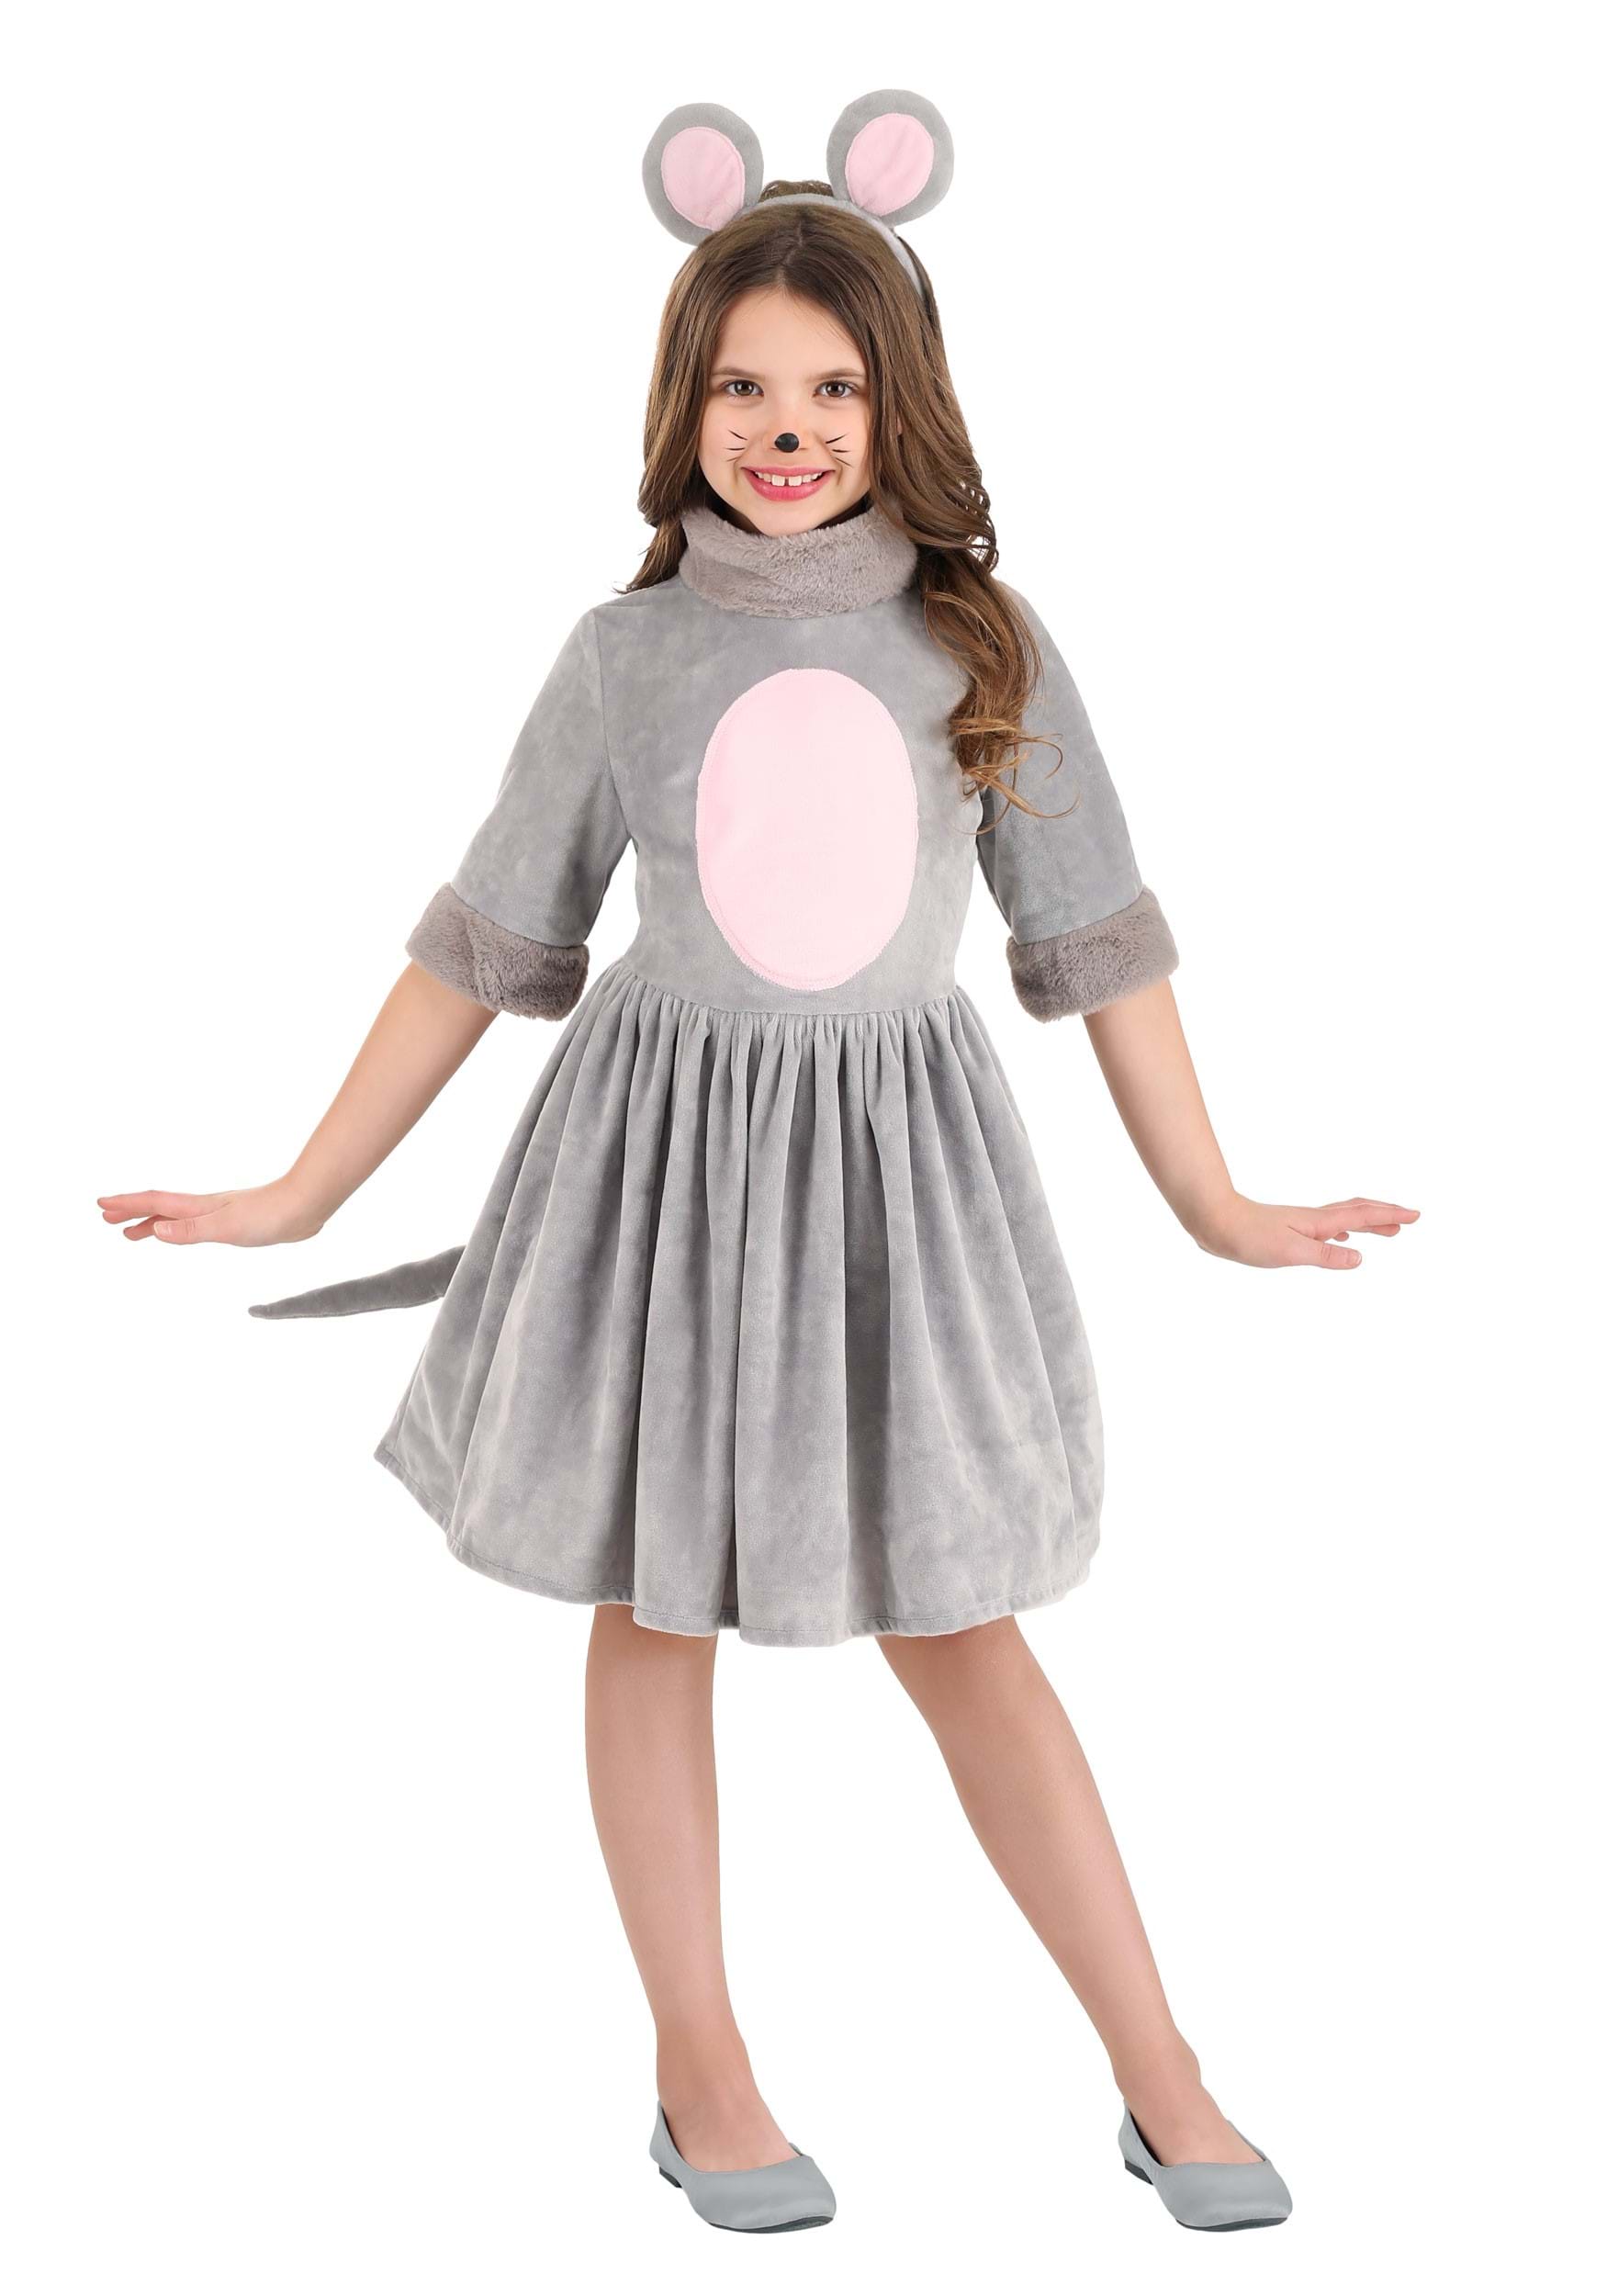 Photos - Fancy Dress FUN Costumes Mouse Dress Girl's Costume Pink/Gray FUN1750CH